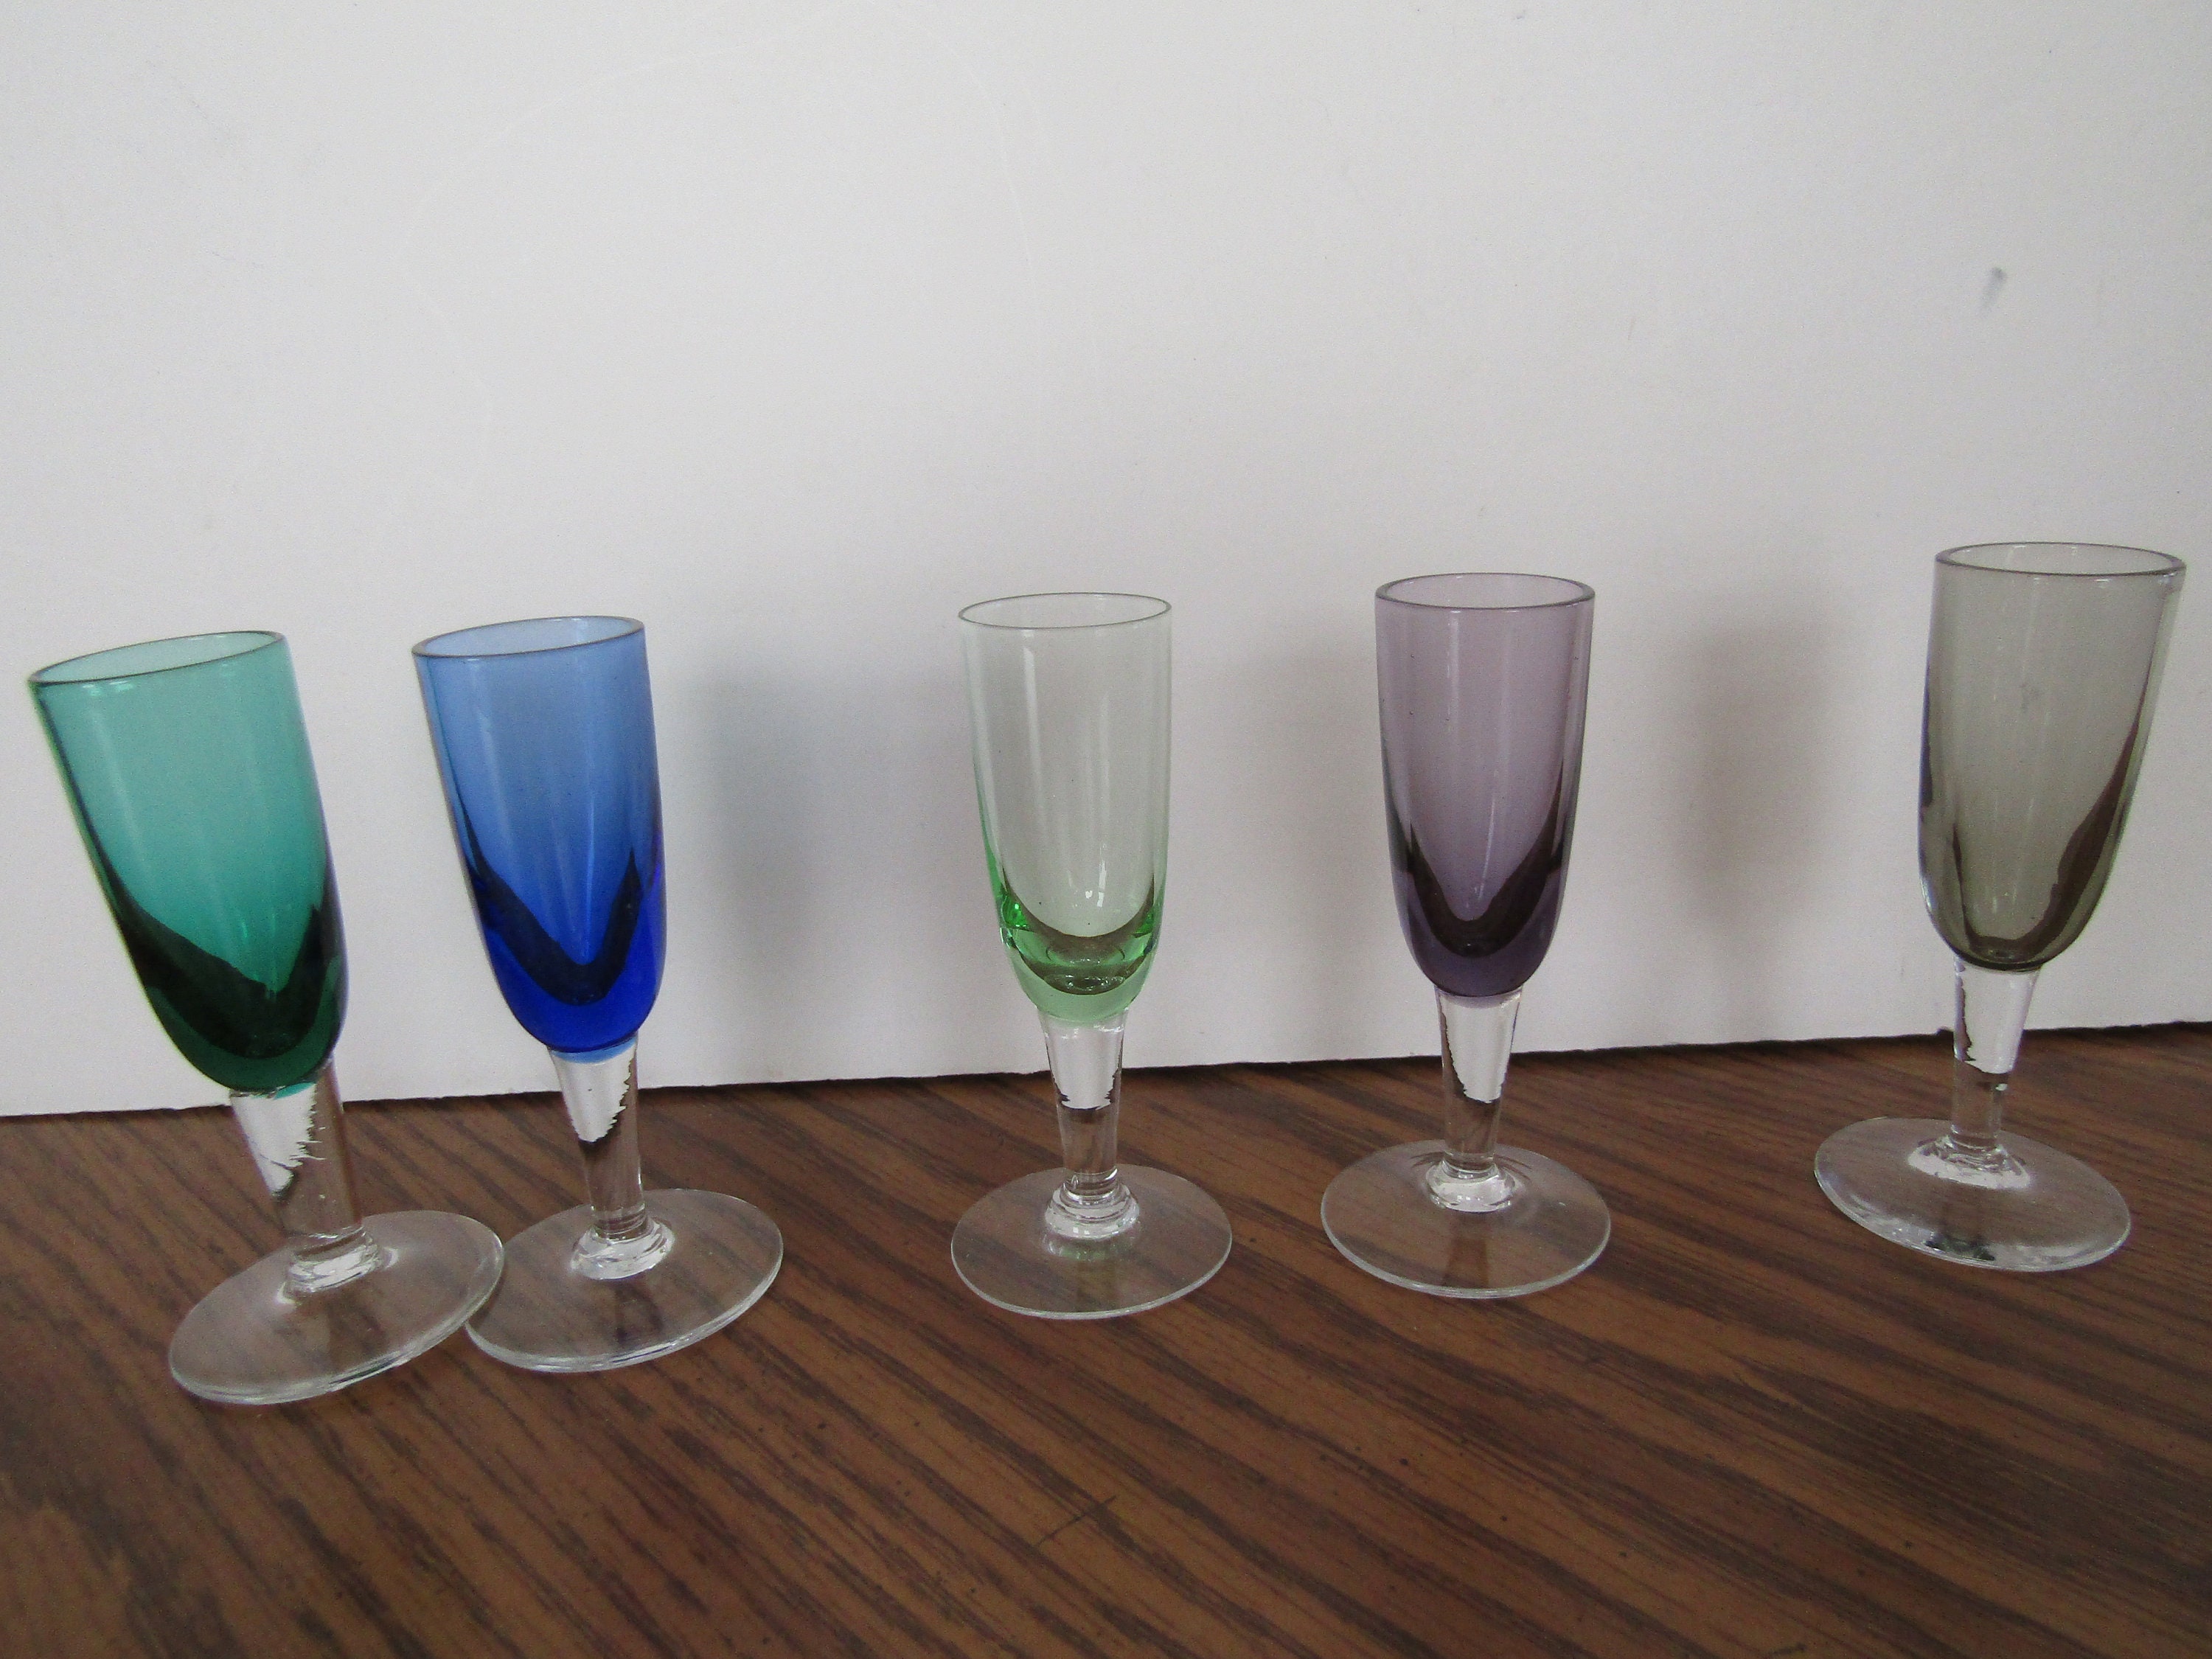 Elegant and Modern Kate Optic Design Wine Glasses - 13 oz Glasses